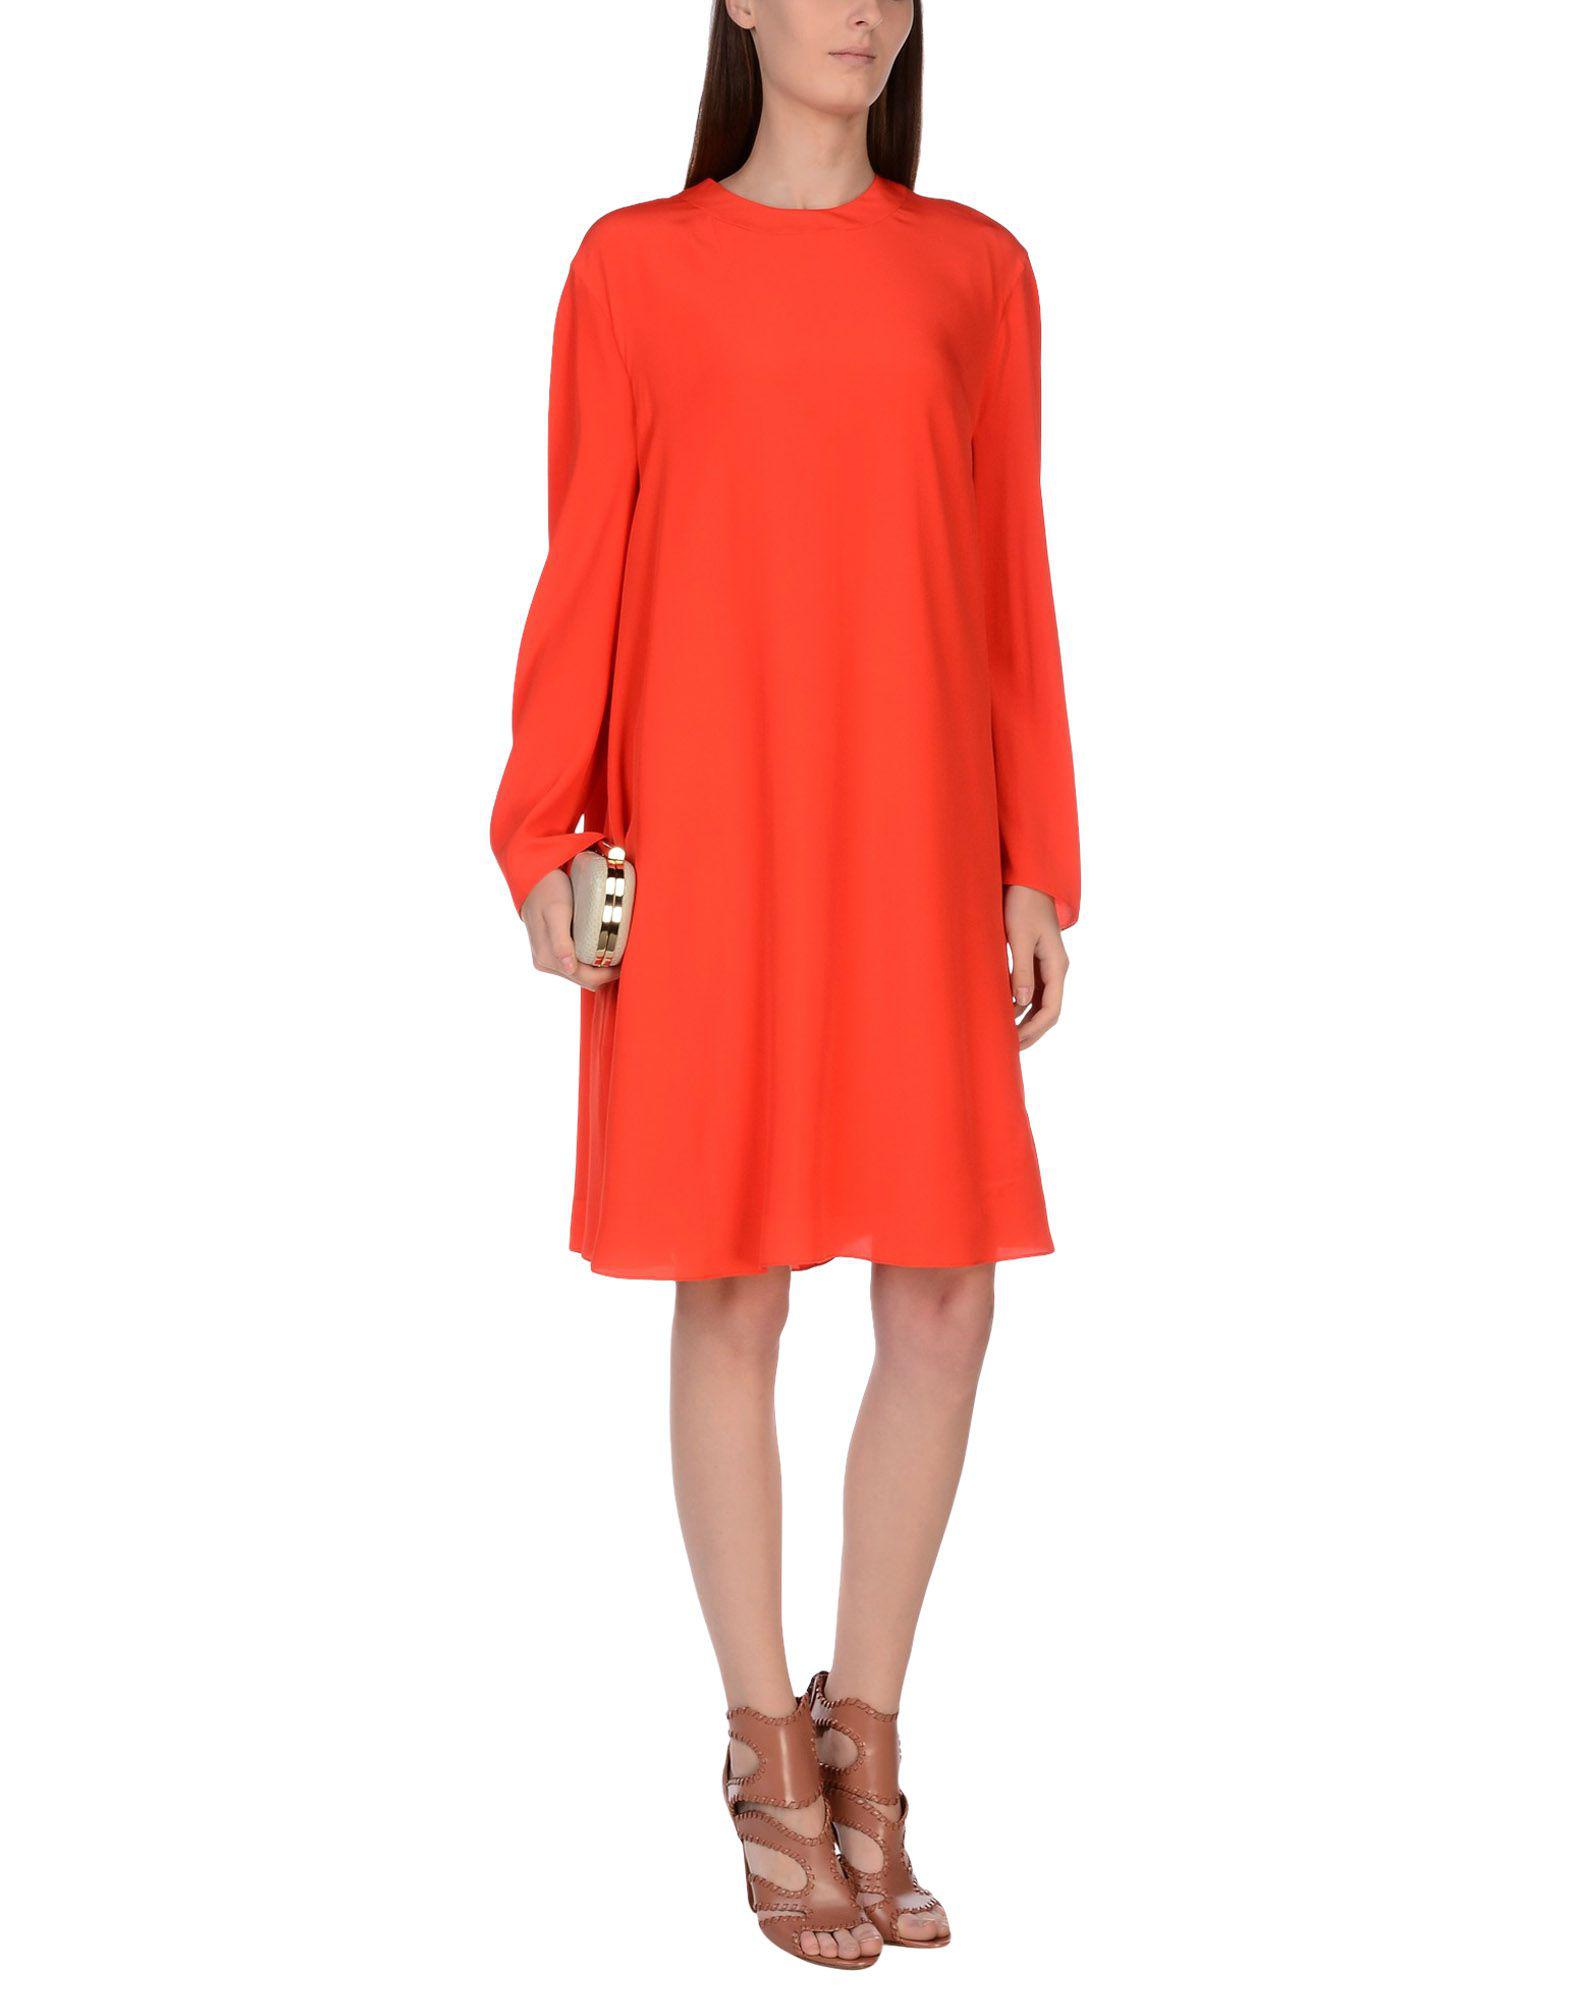 Balenciaga Silk Knee-length Dress in Red - Lyst